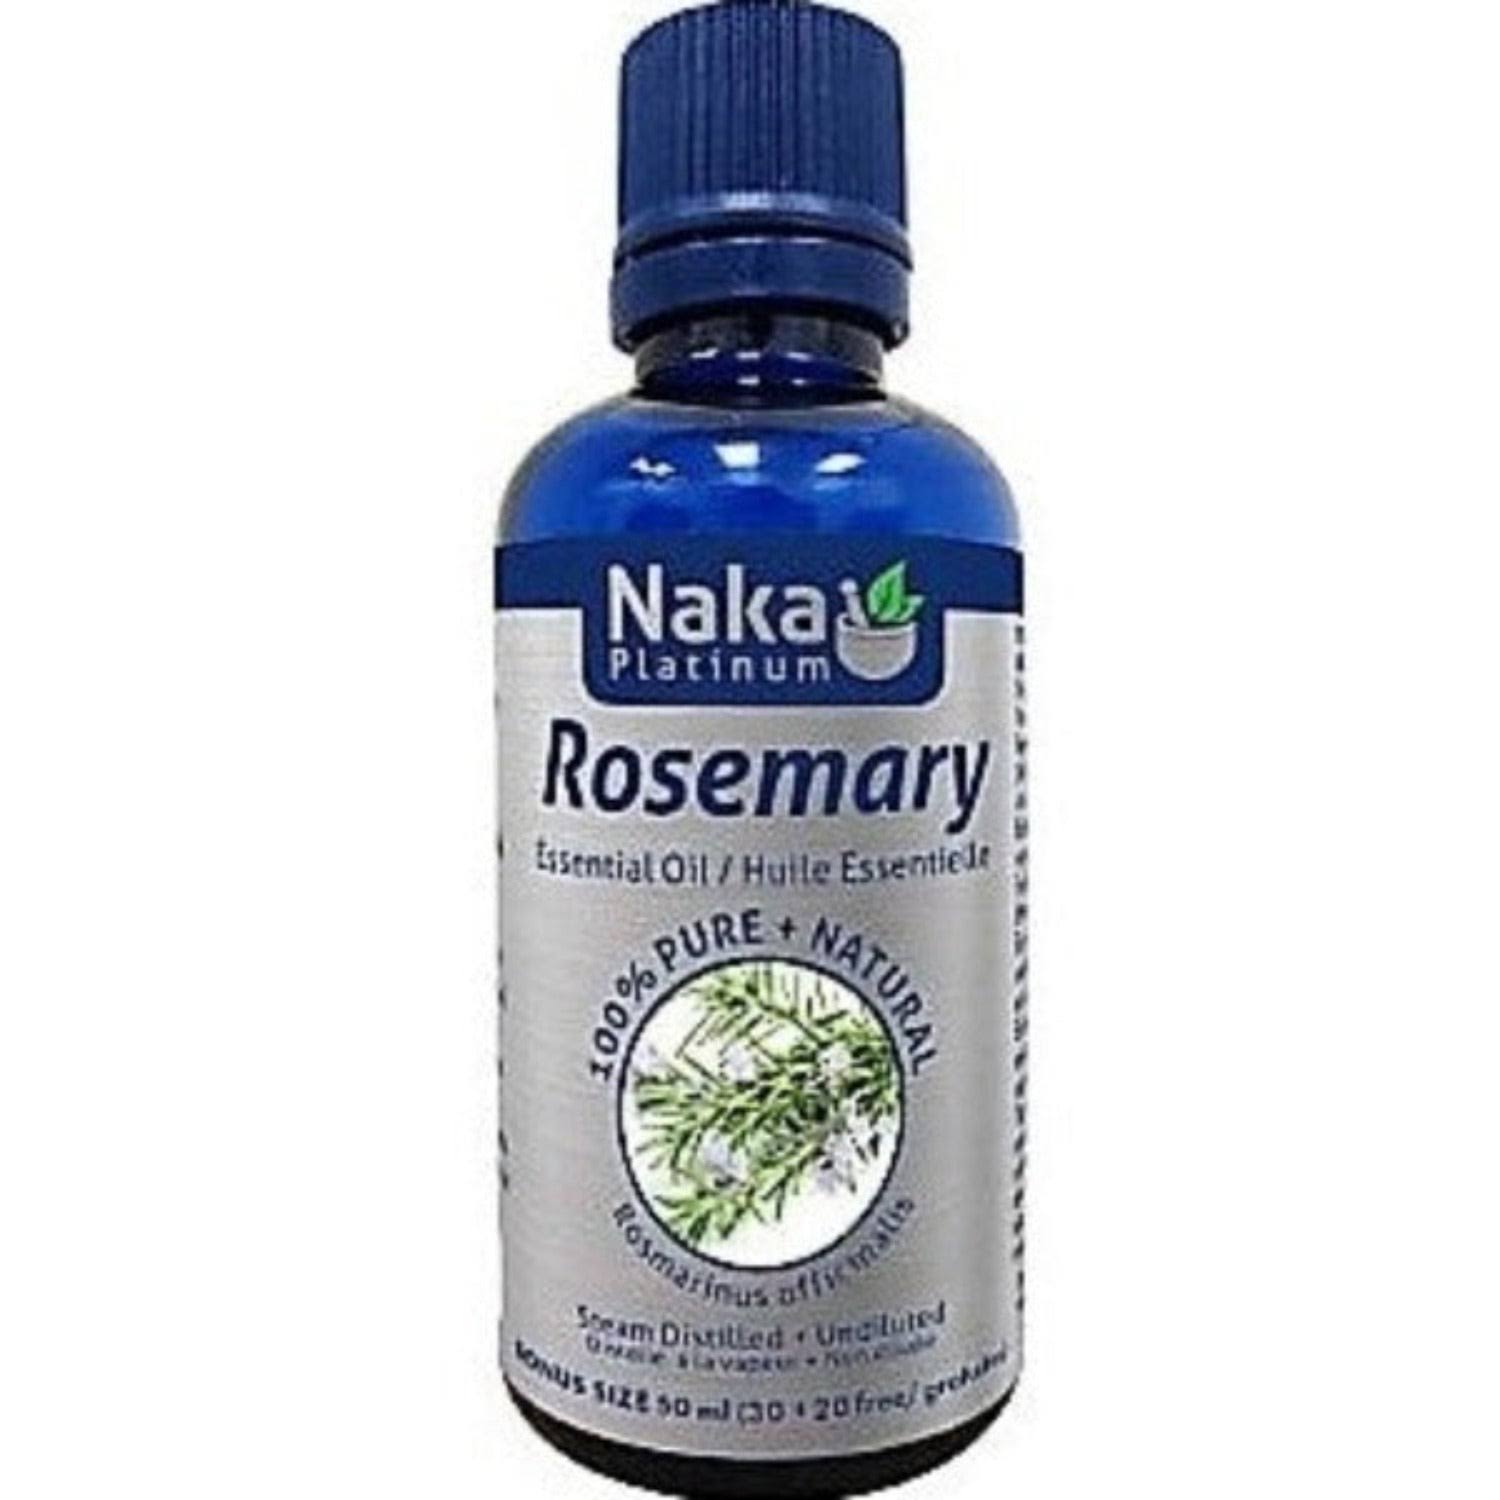 Naka 100% Pure Rosemary Essential Oil - 50ml